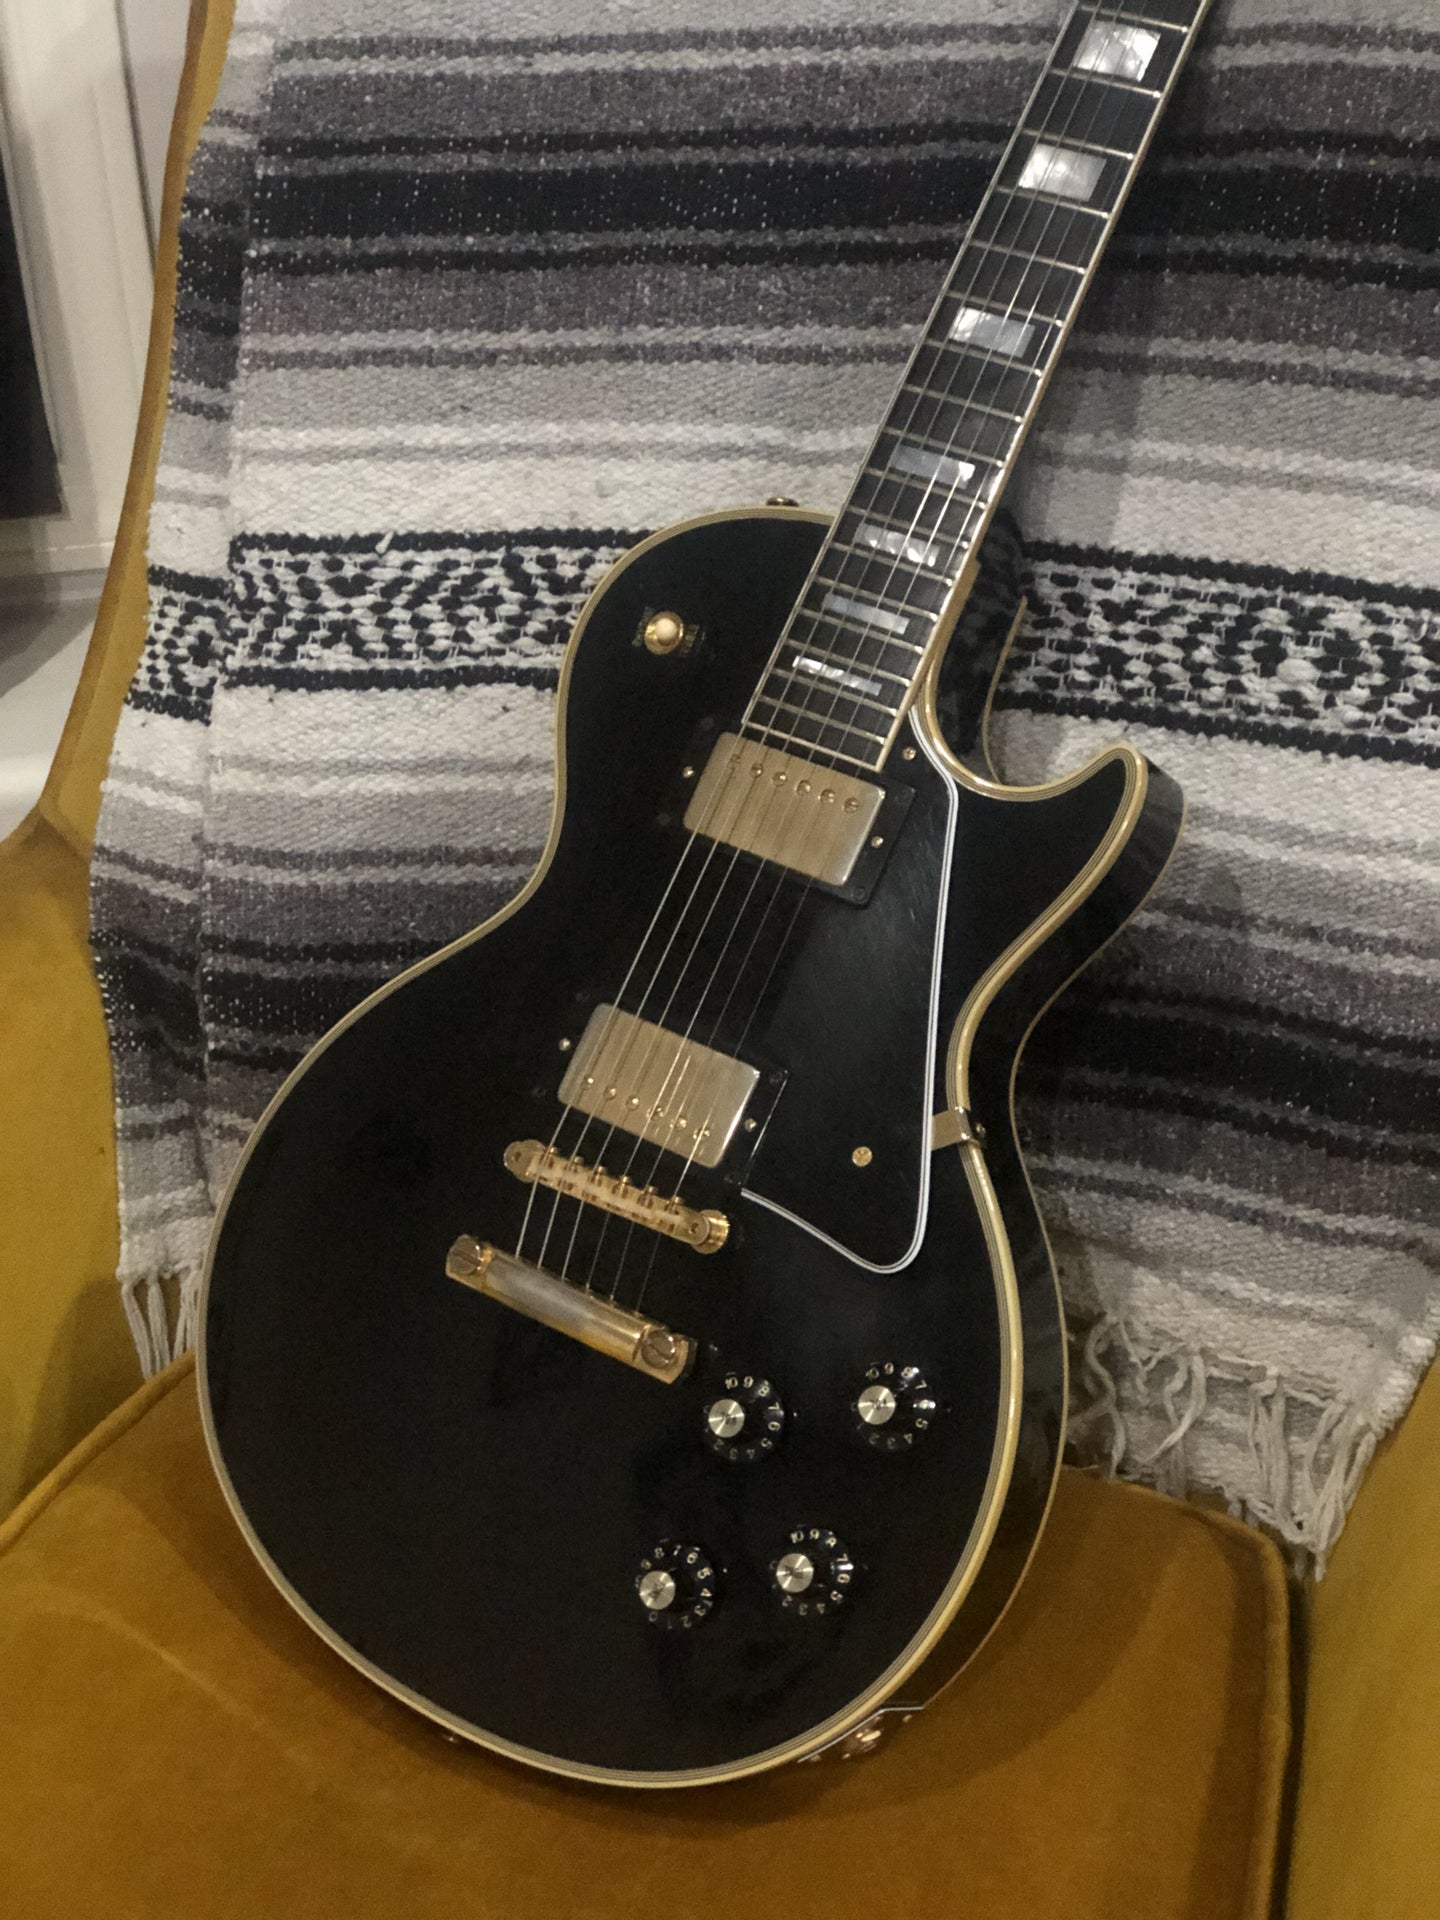 SOLD - 1 of 300 50th Anniversary Gibson CS 1968 Les Paul Custom